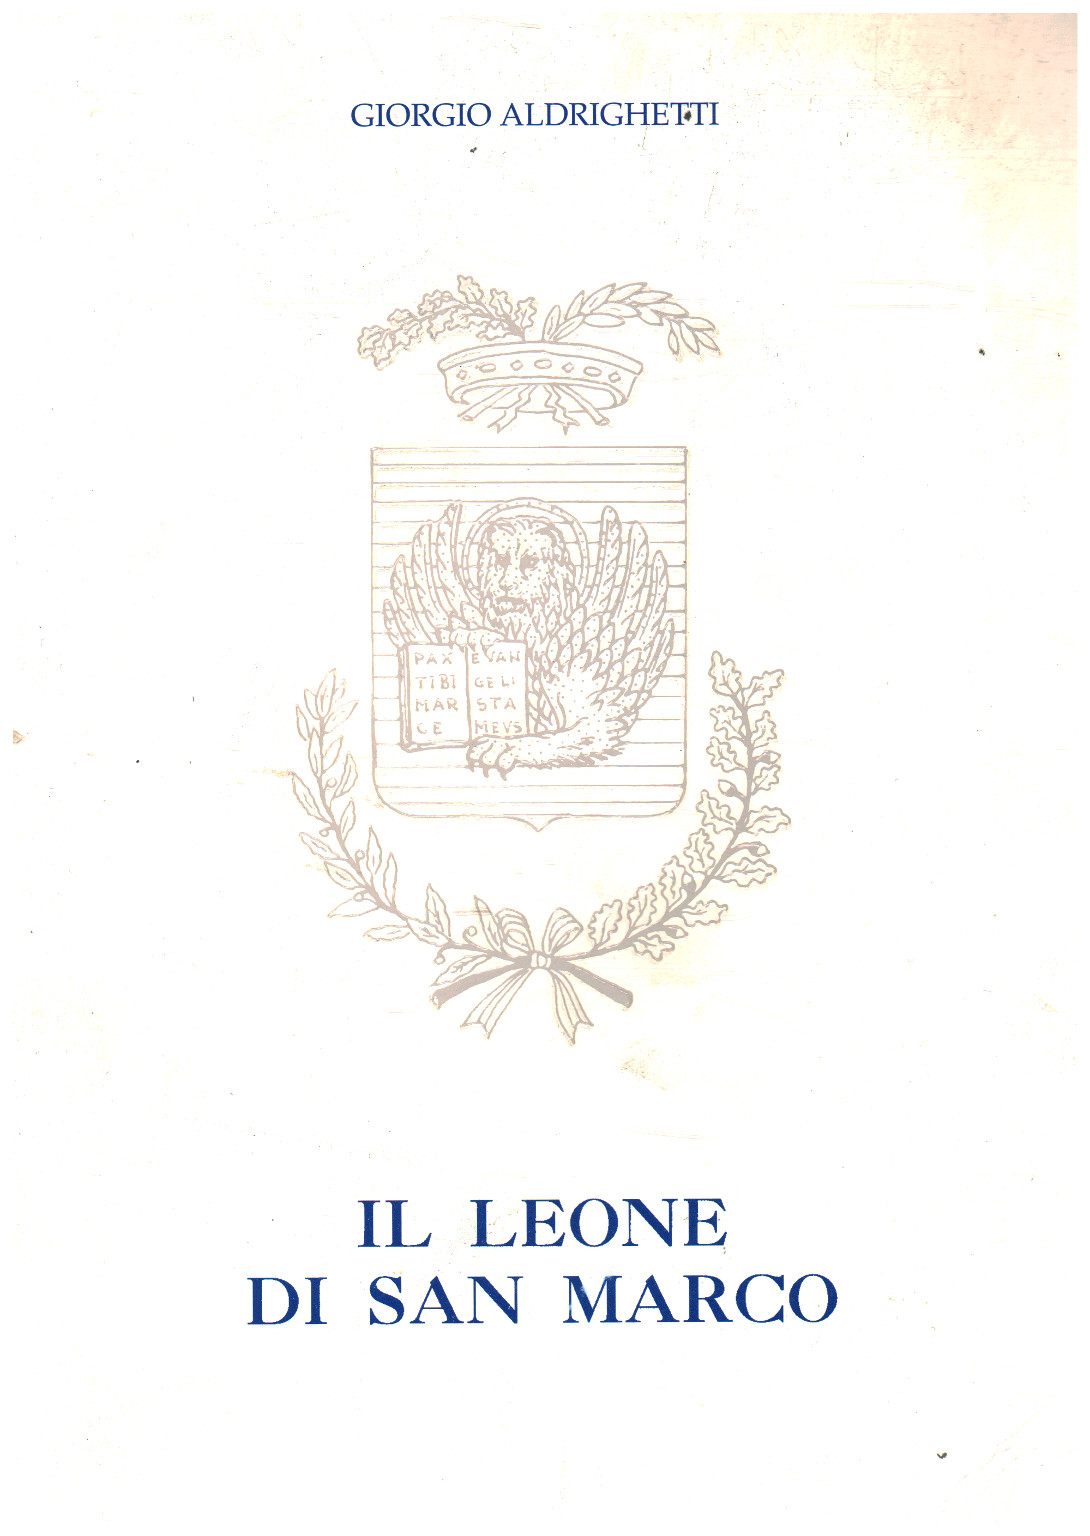 El León de San Marco, Giorgio Aldrighetti